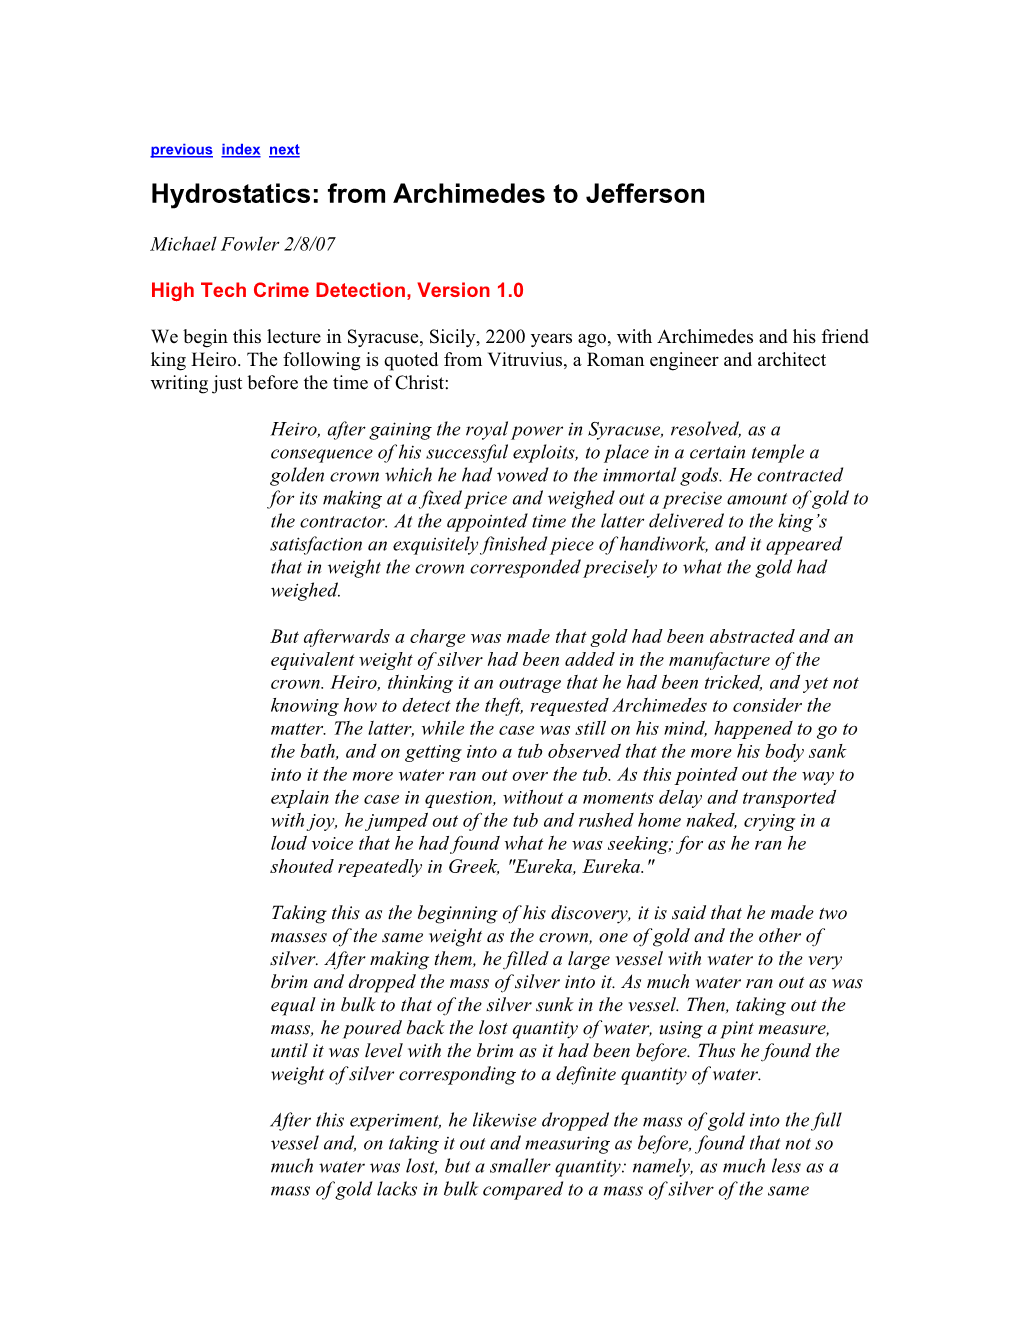 Hydrostatics: from Archimedes to Jefferson